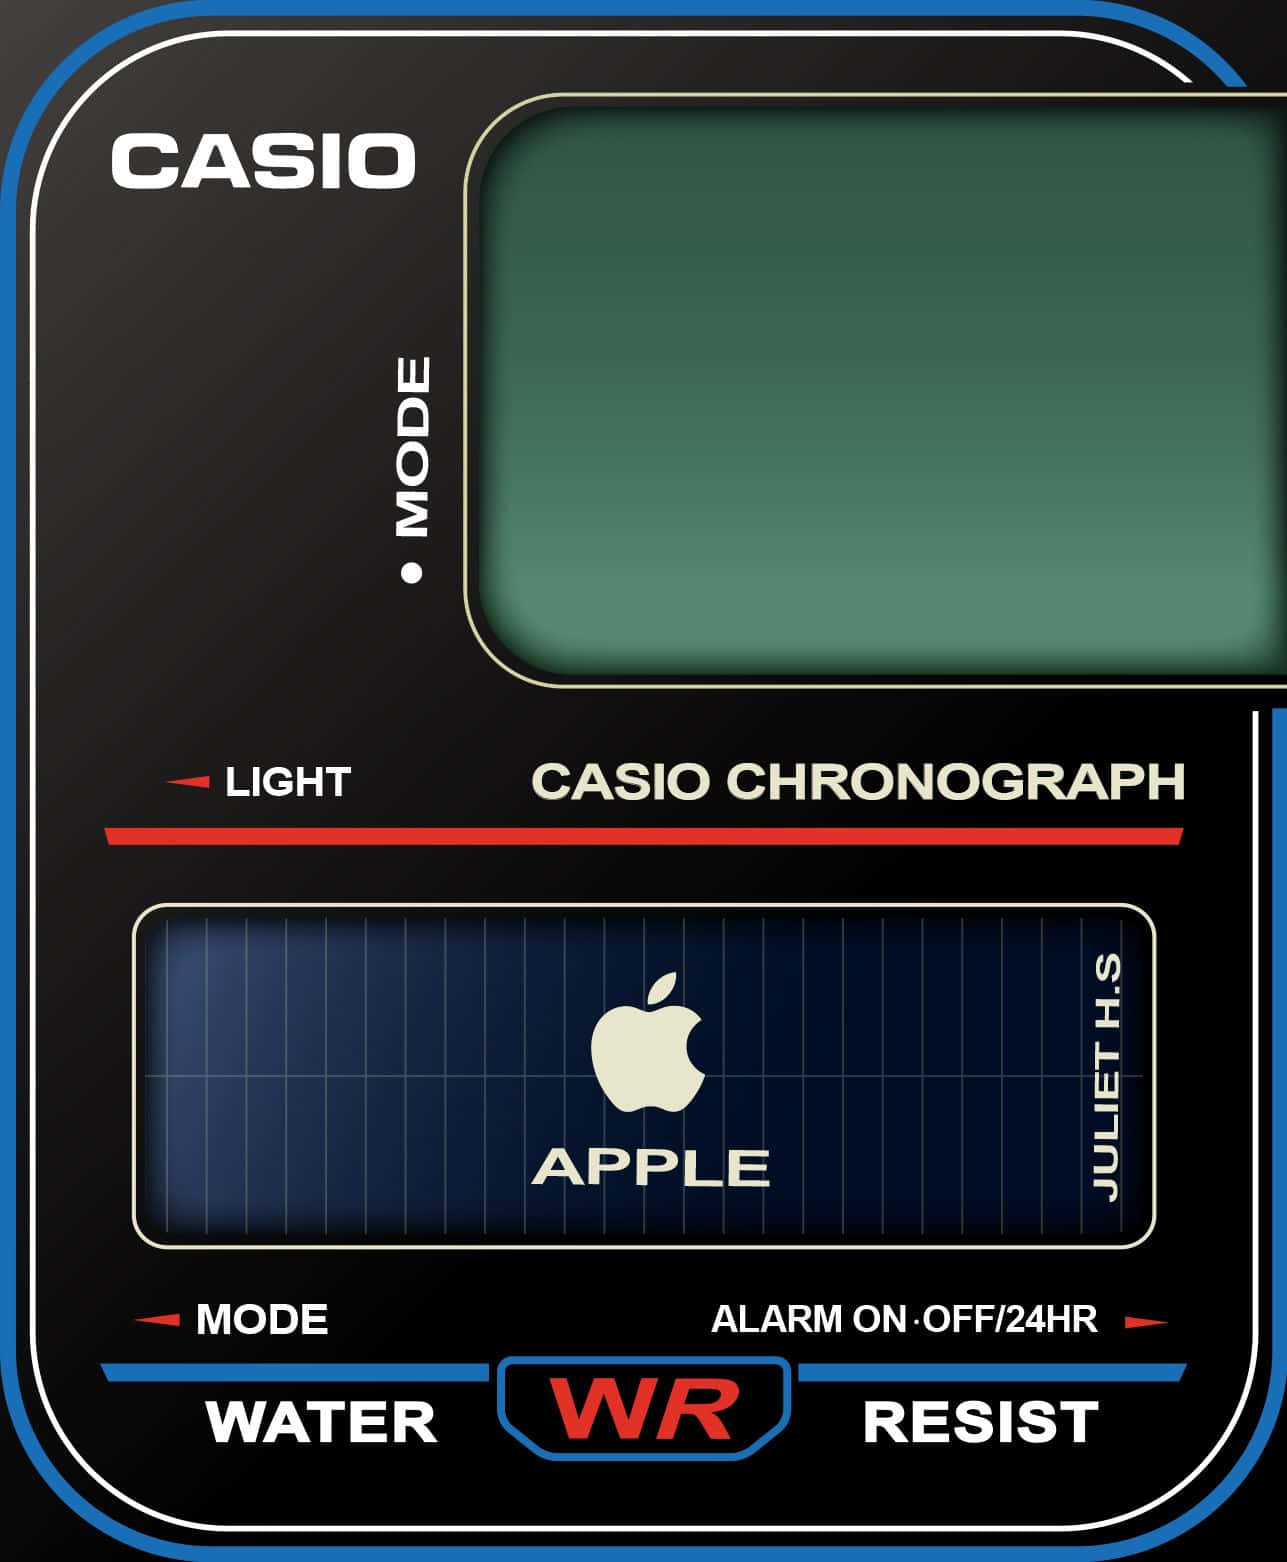 Casio Chronograph - Wr Resistor